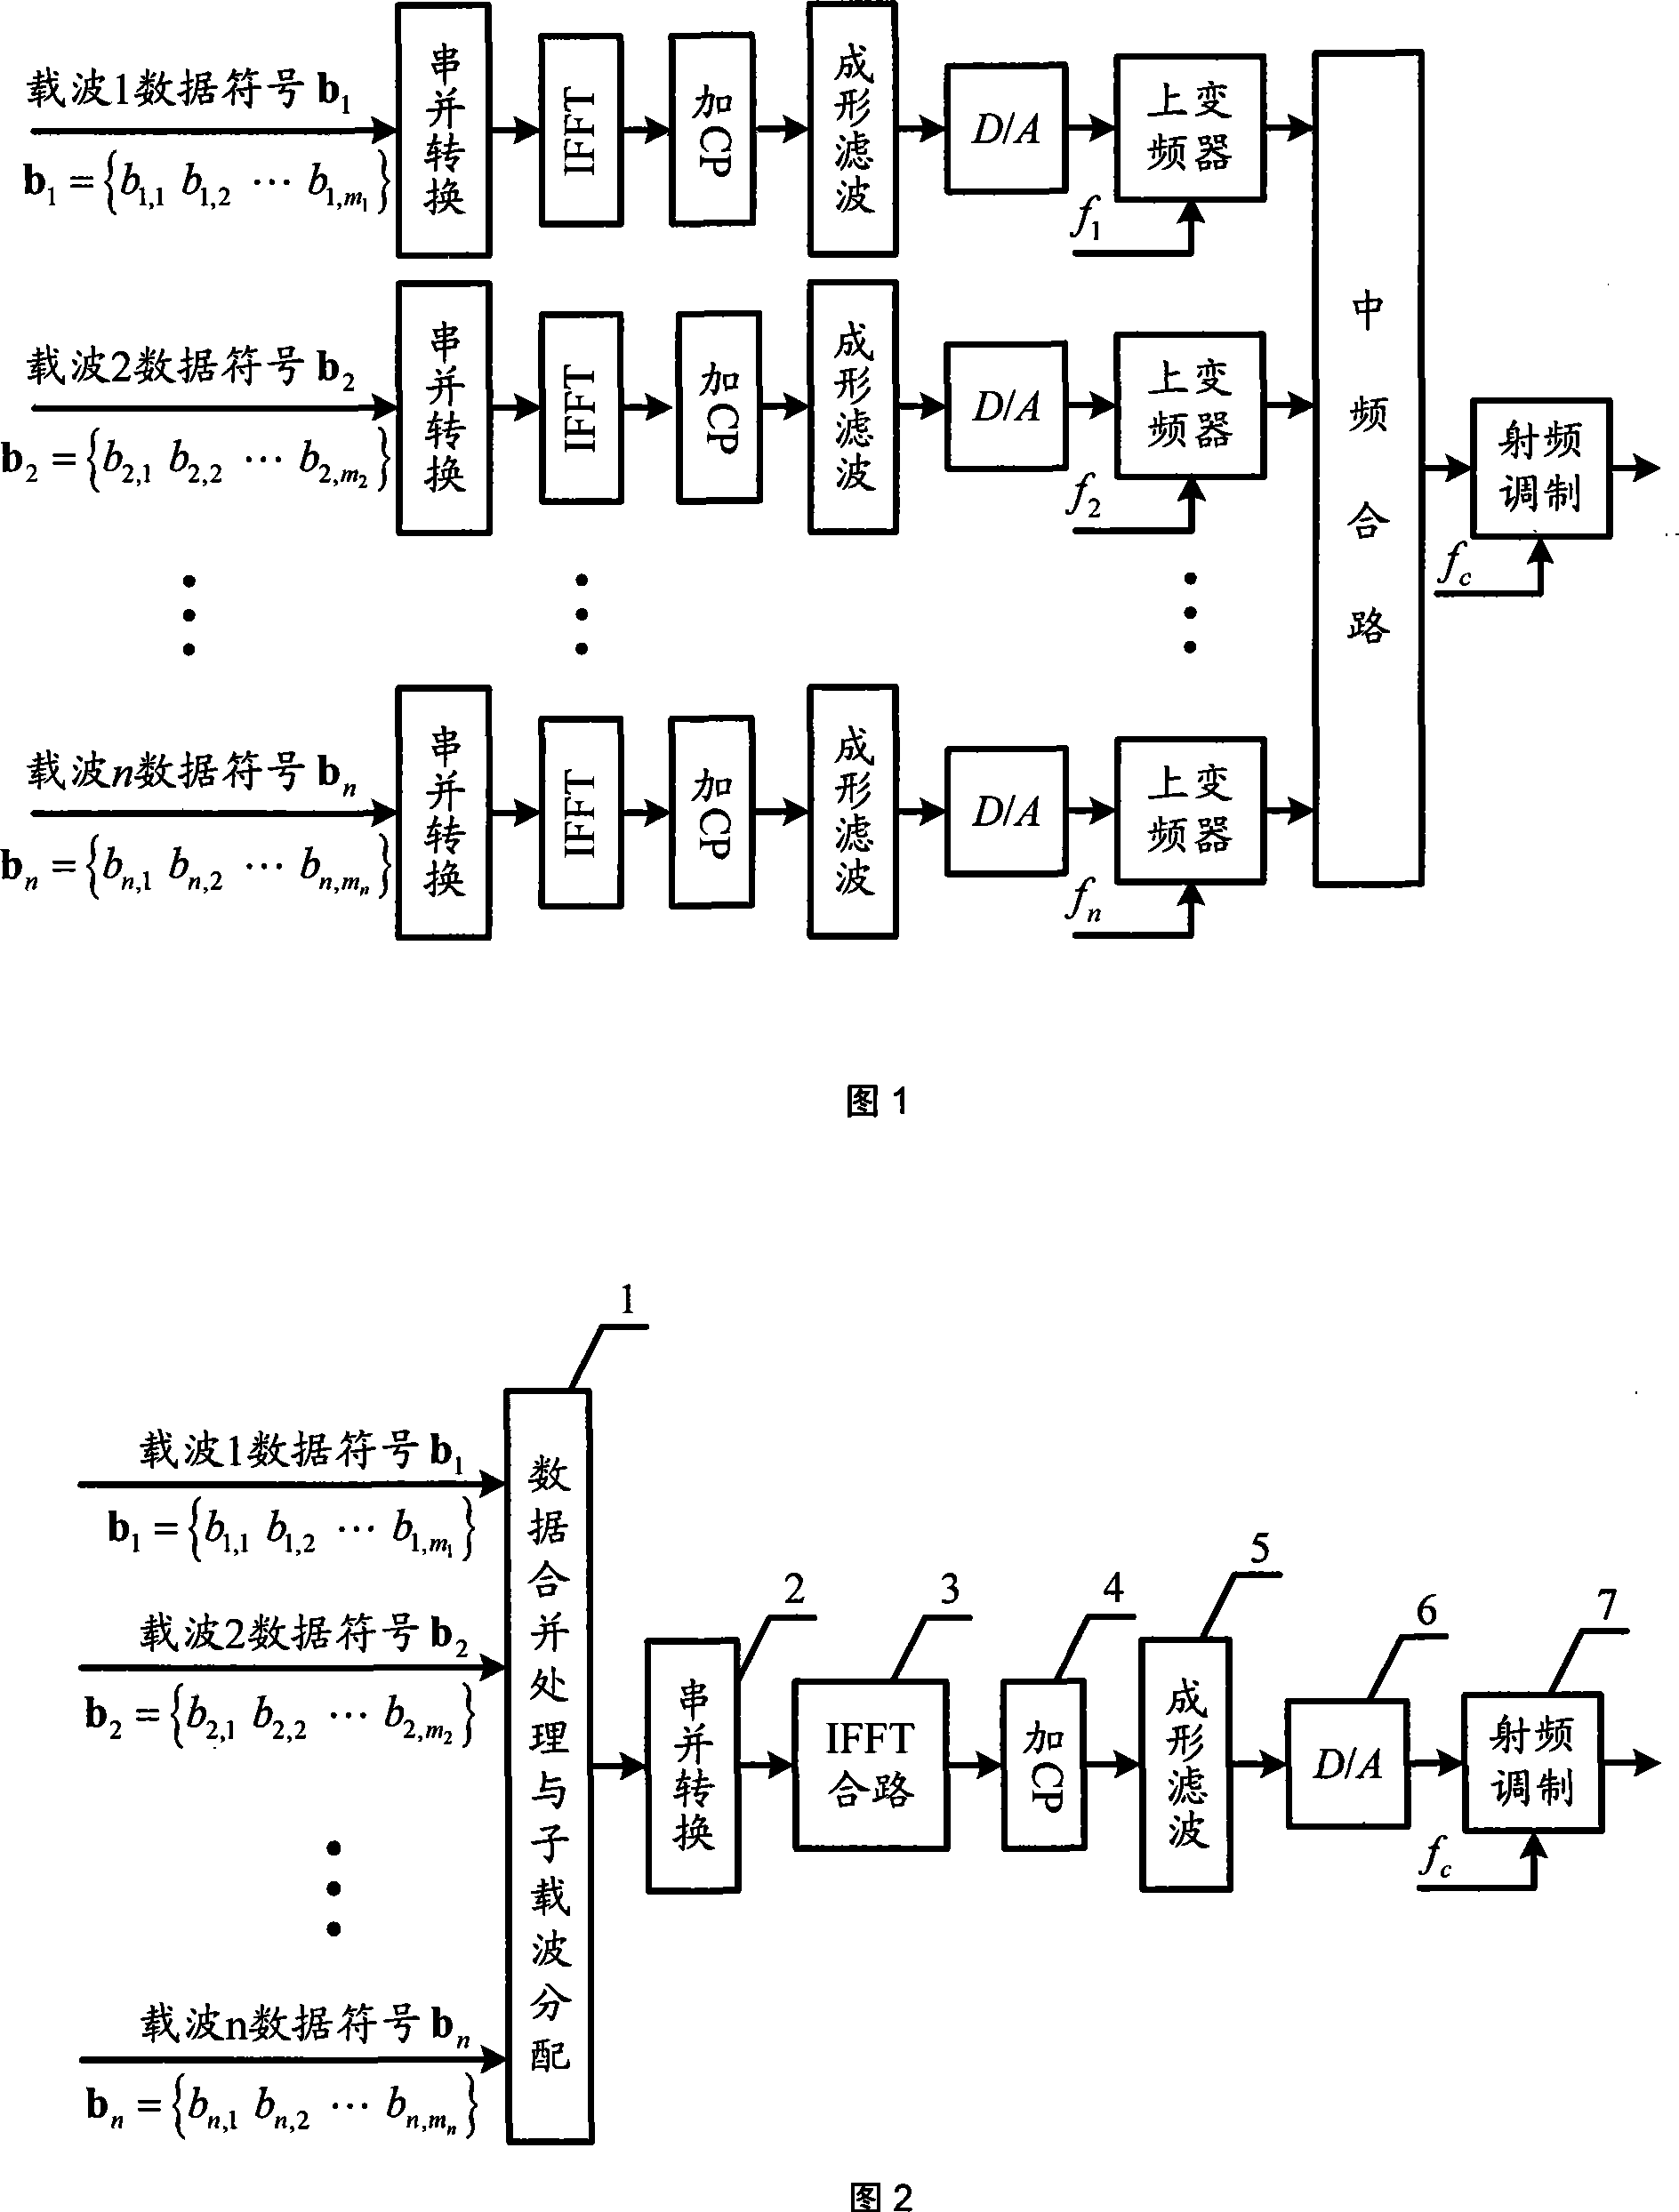 Novel OFDM system multi-carrier path combining method